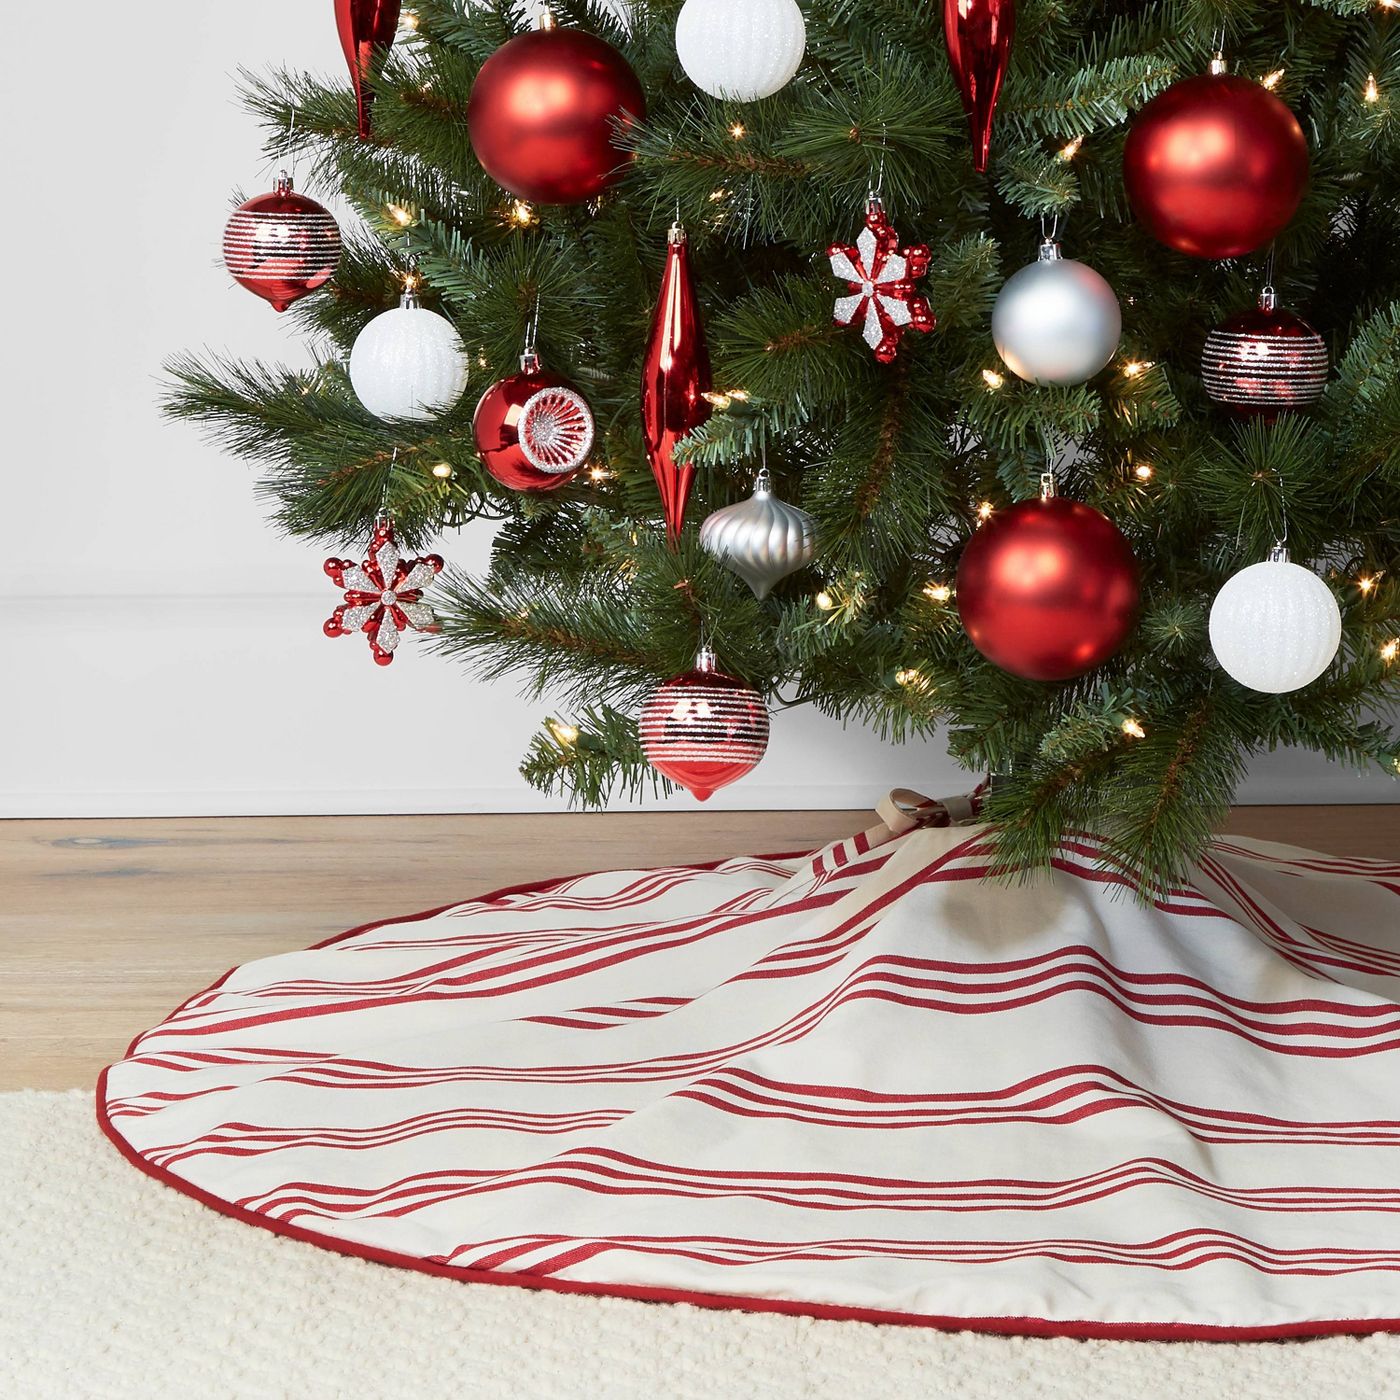 Royal Stewart Tartan Plaid Xmas Tree Skirt for Christmas Decorations Indoor Outdoor McC538arthy 48 inches Christmas Tree Skirt